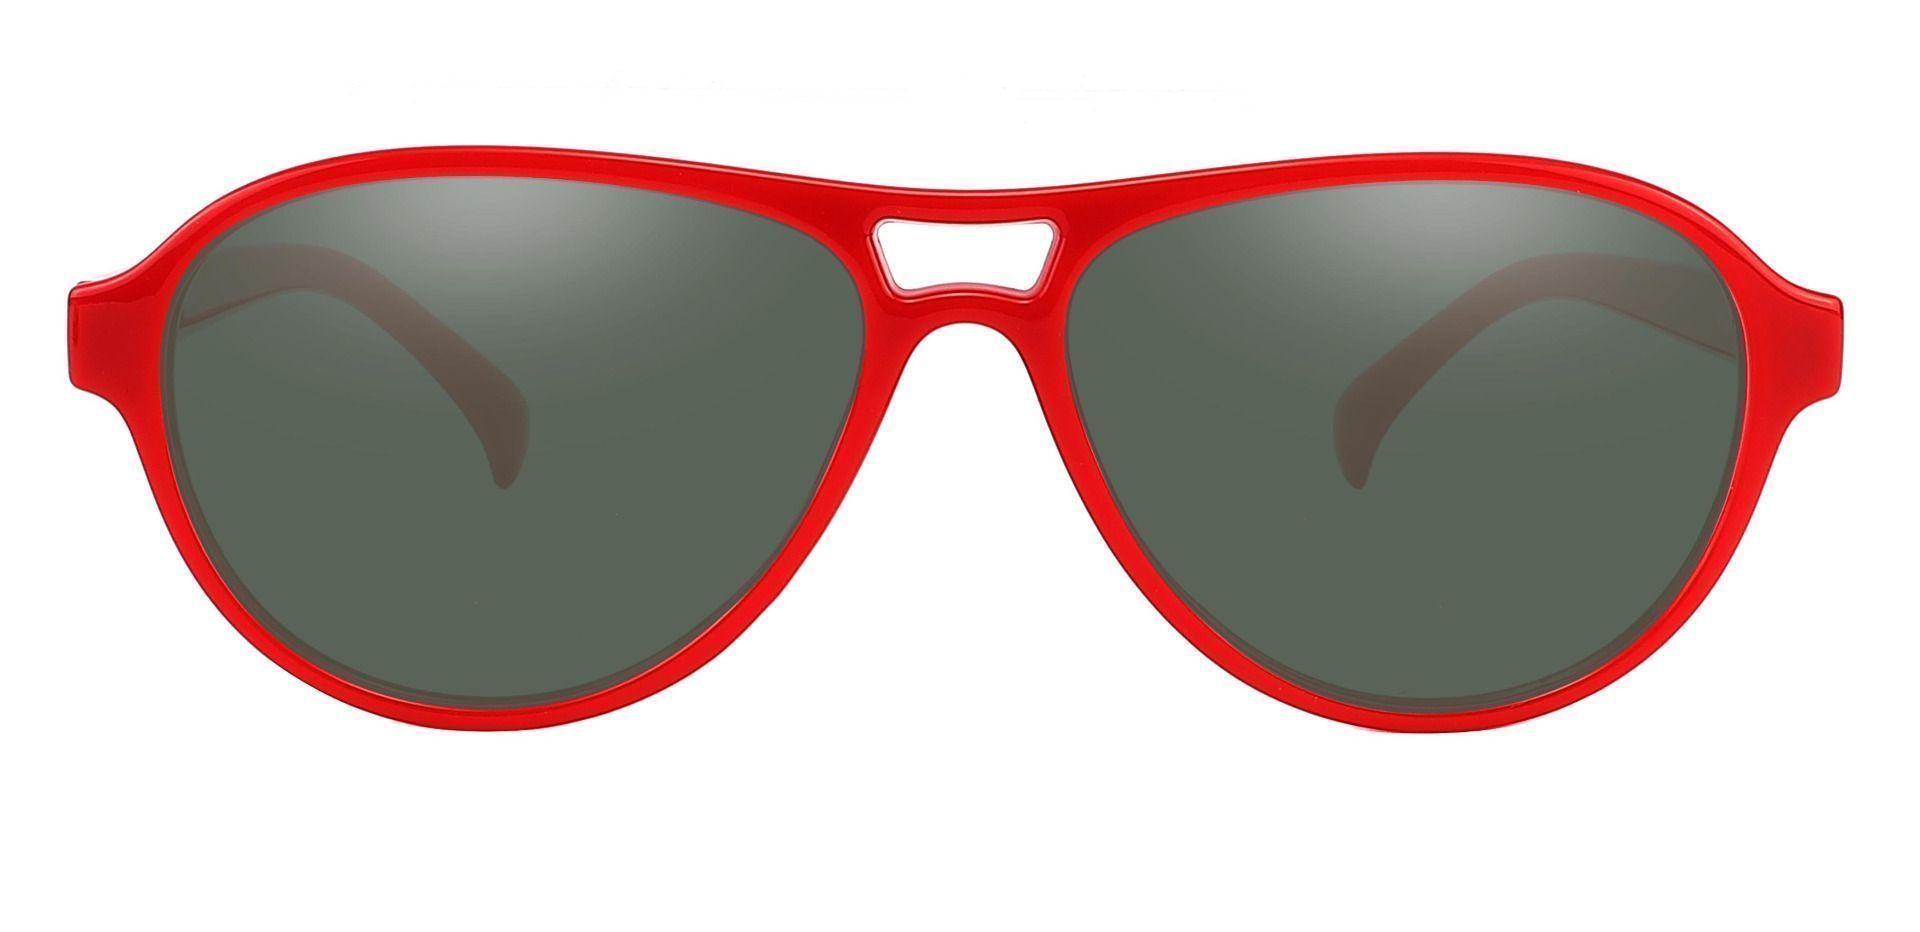 Sosa Aviator Lined Bifocal Sunglasses - Red Frame With Green Lenses